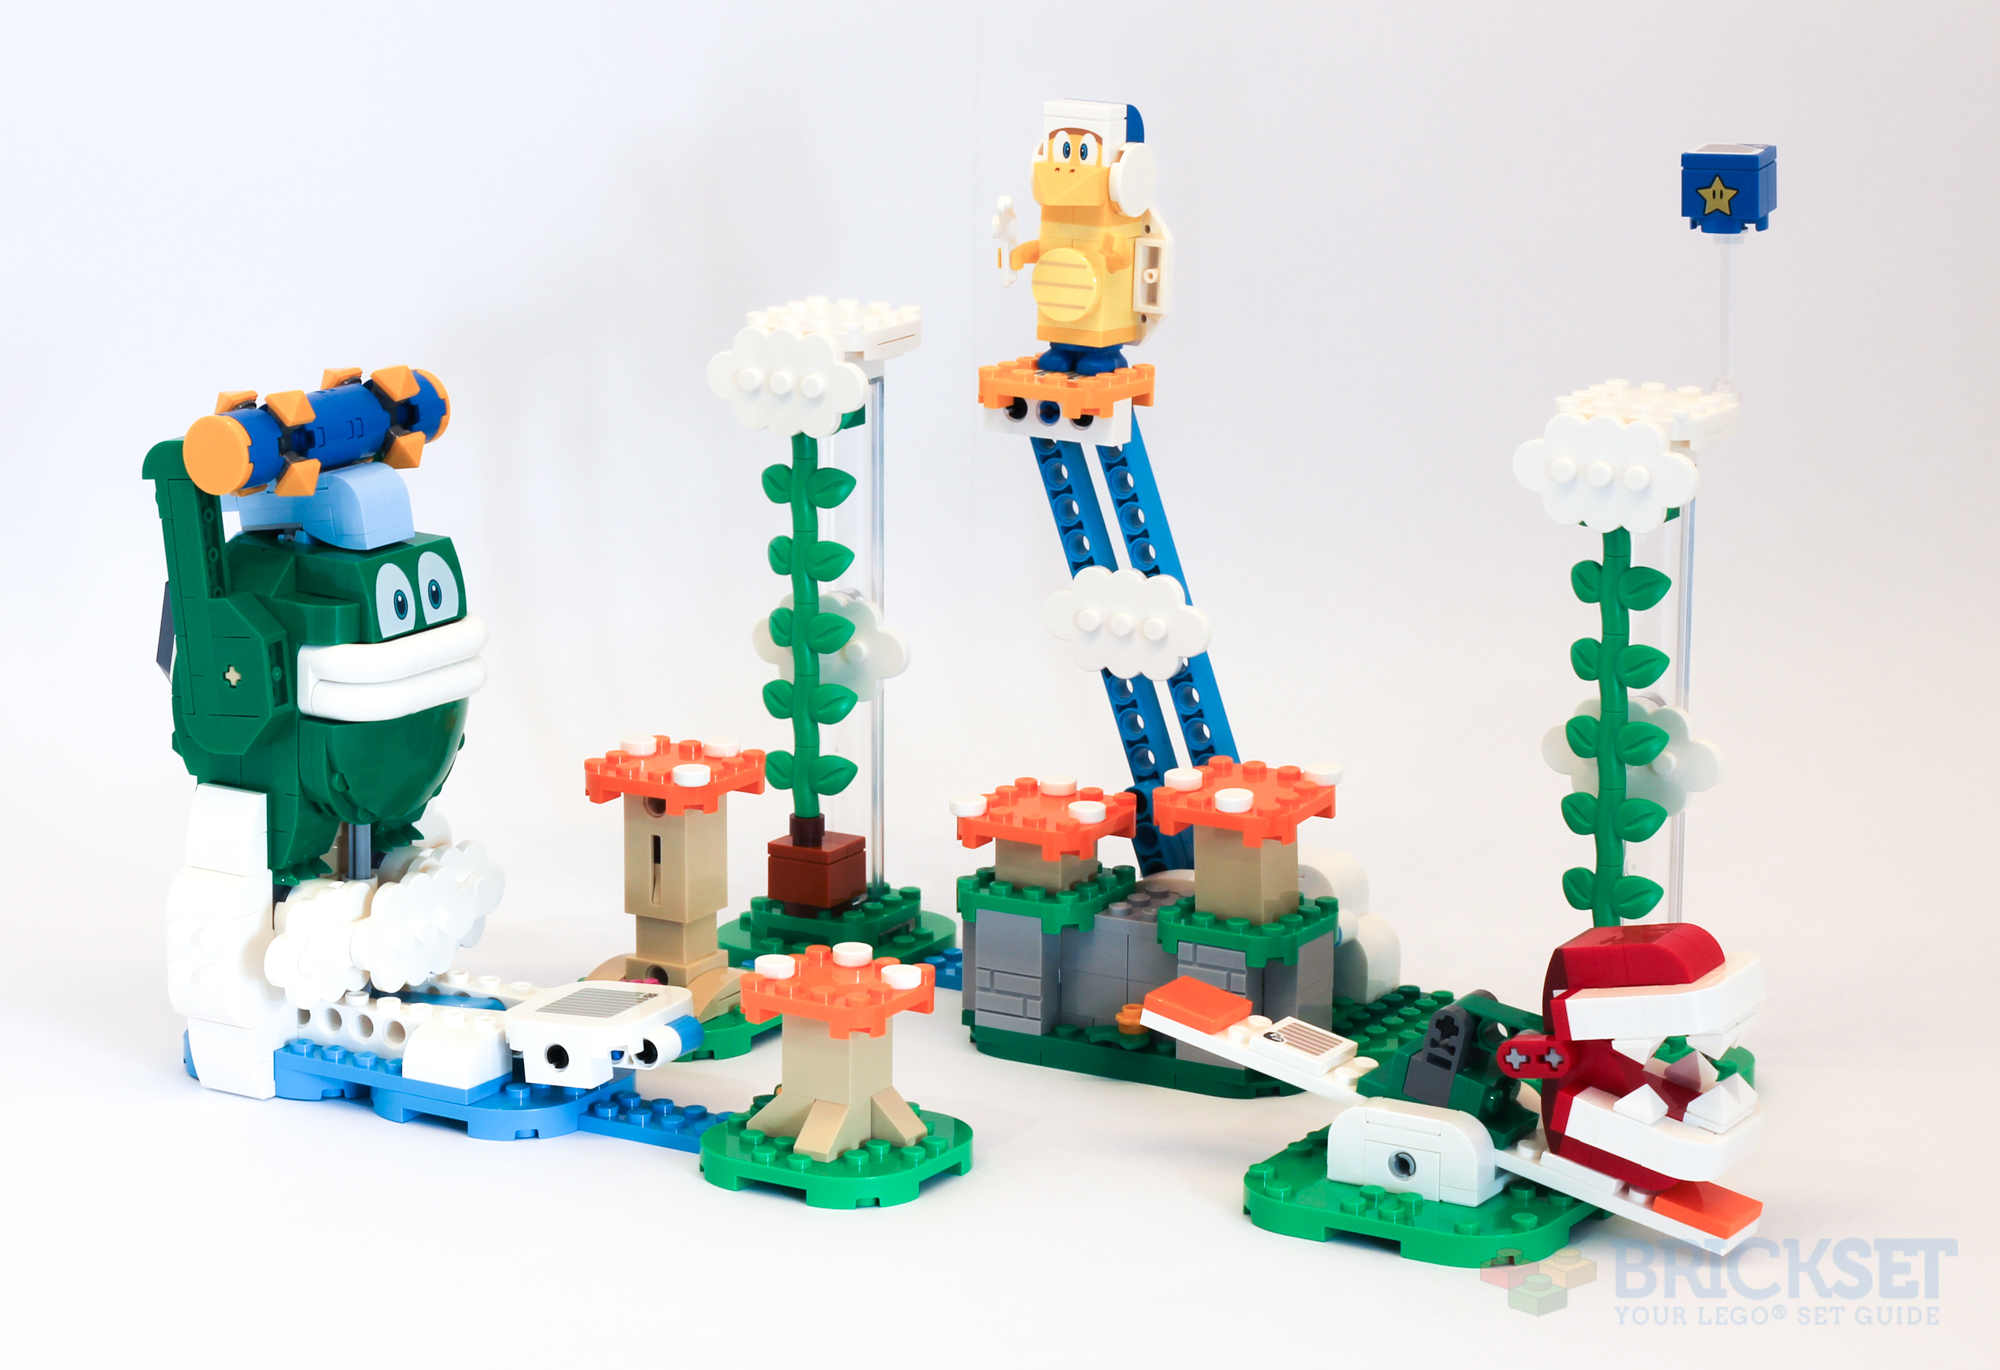 Big Spike's Cloudtop Challenge LEGO set